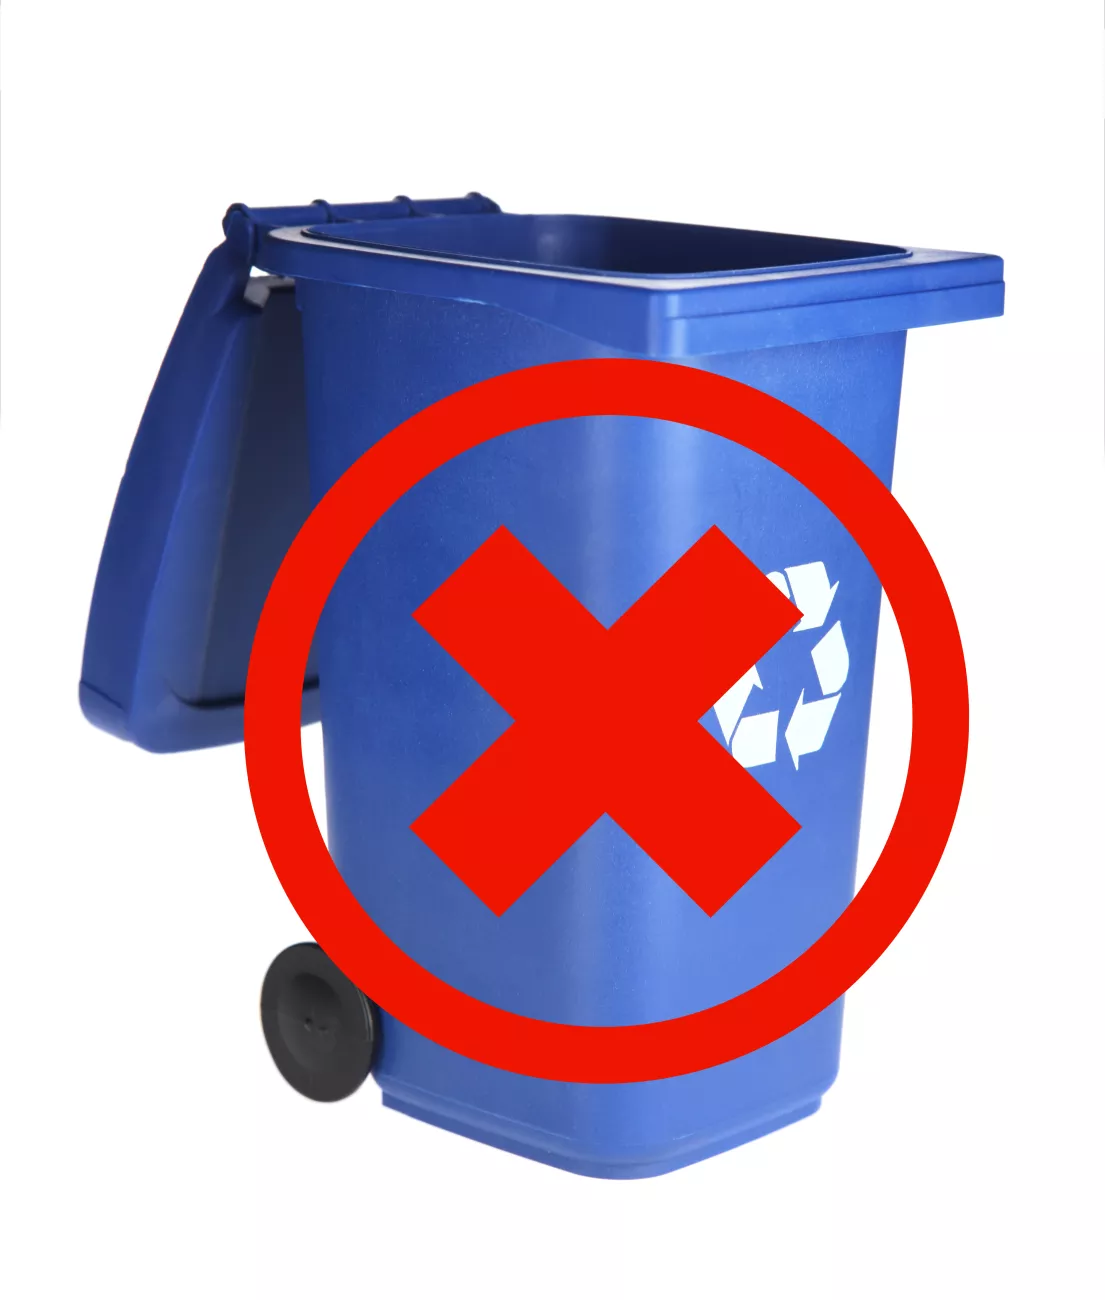 Blue Box Recycling Program